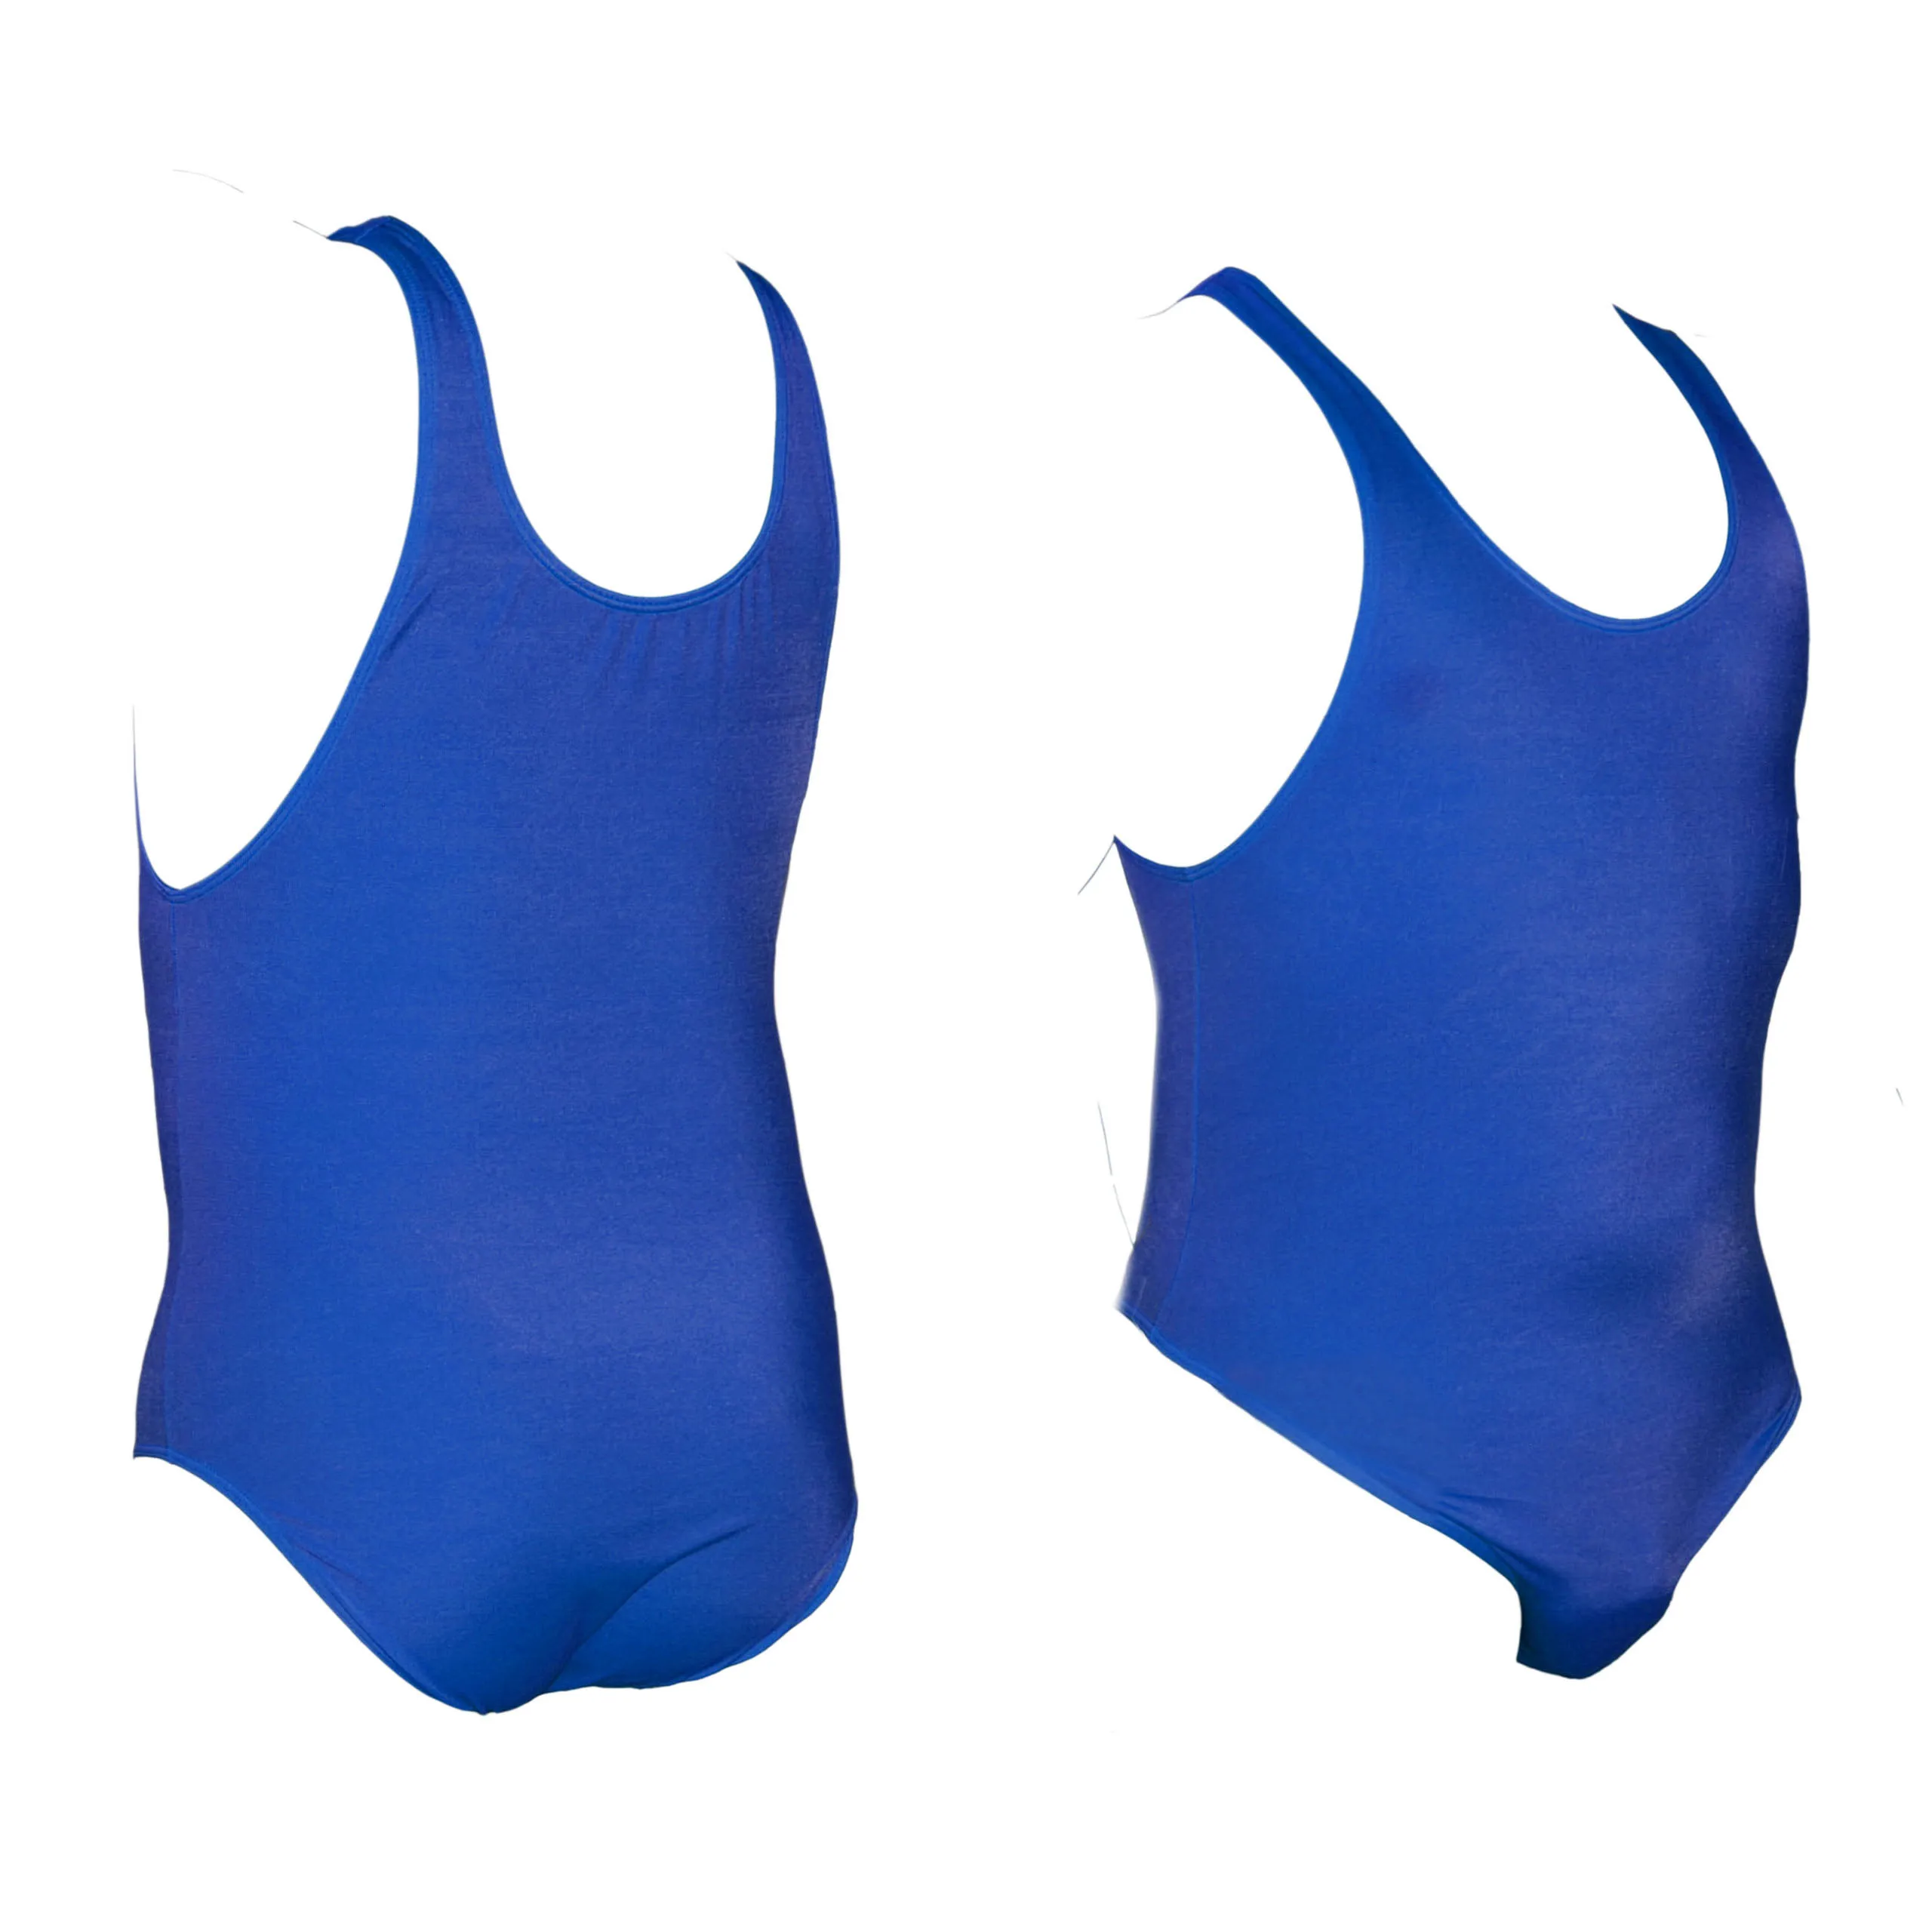 Mens collant body suit underwear g3081 cor sólida stretchy ginásio terno de natação tecido biquíni spandex poli